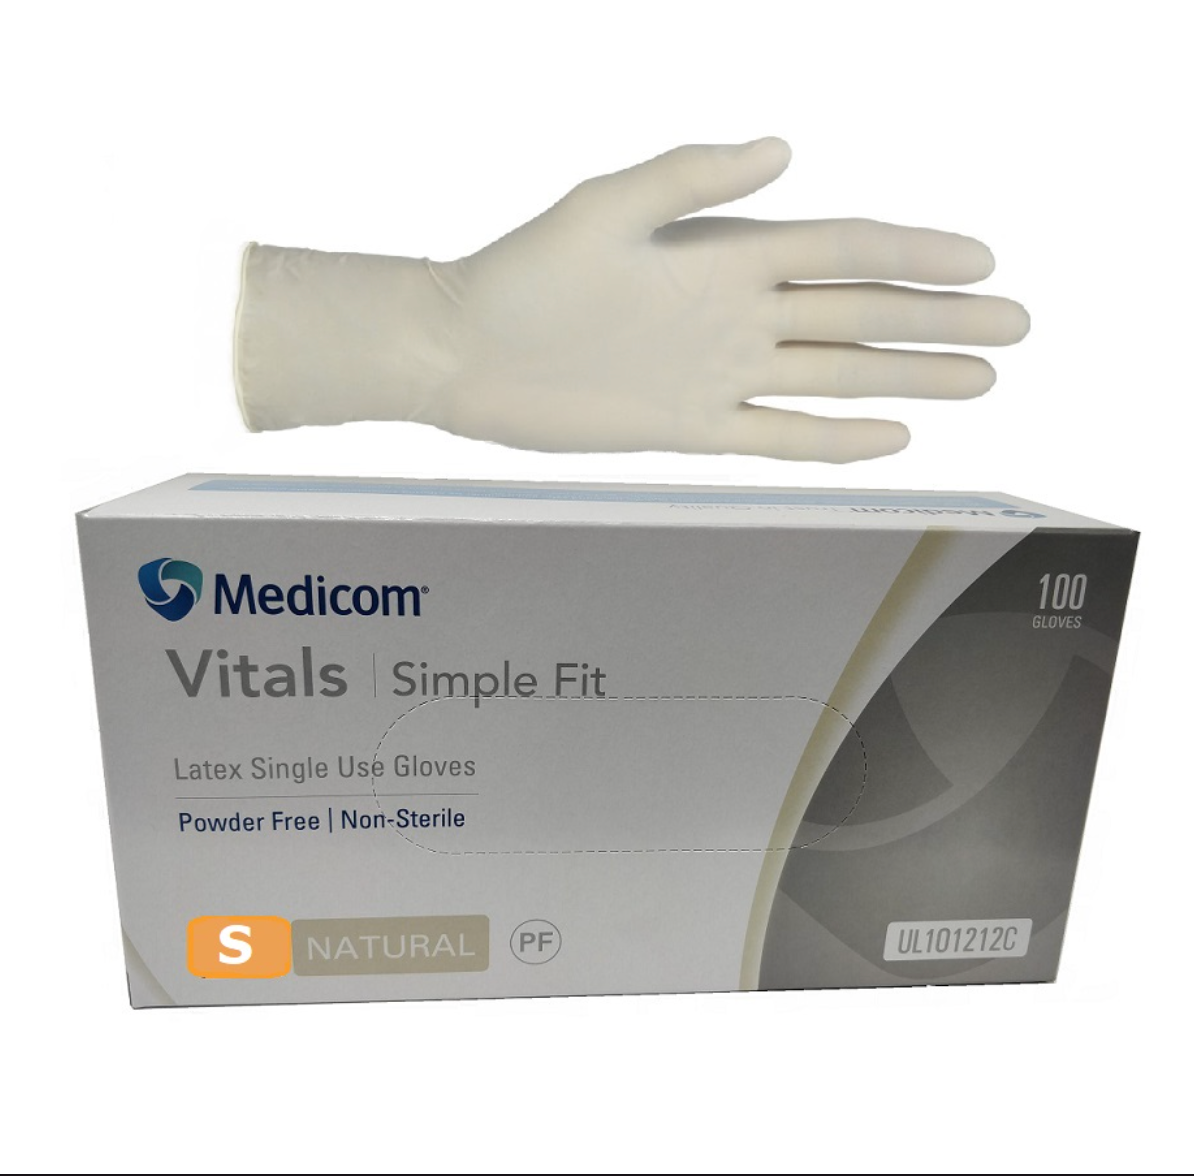 Medicom Vitals Latex Powder Free Gloves 100pk - Small